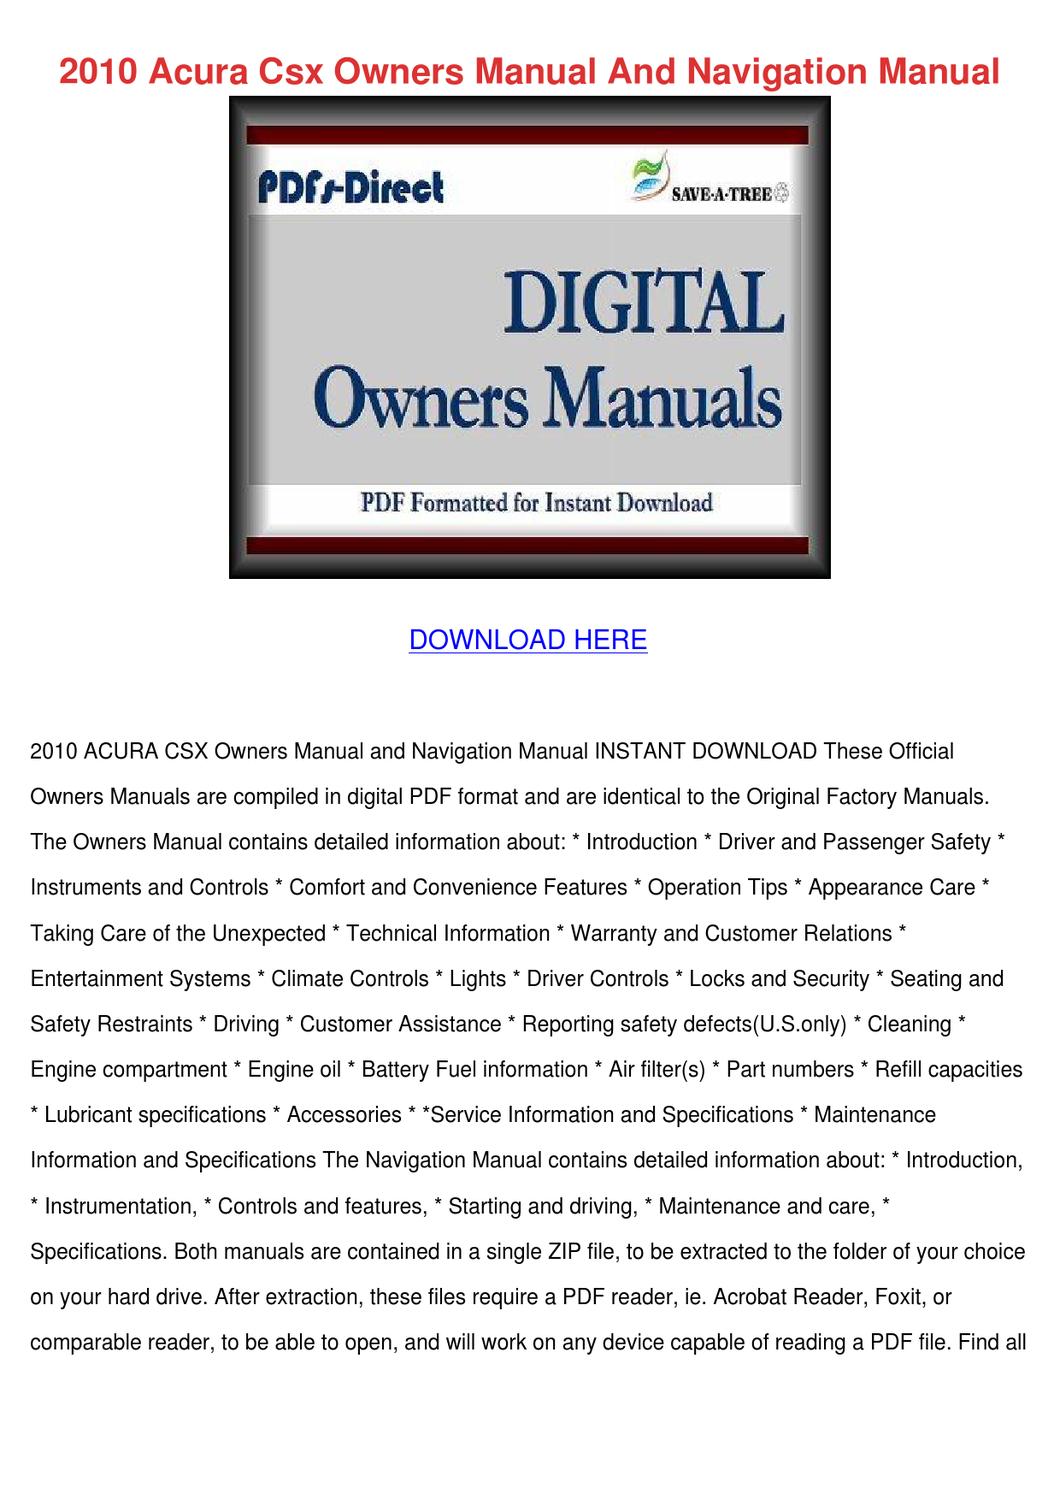 honda odyssey 1997 service manual pdf free